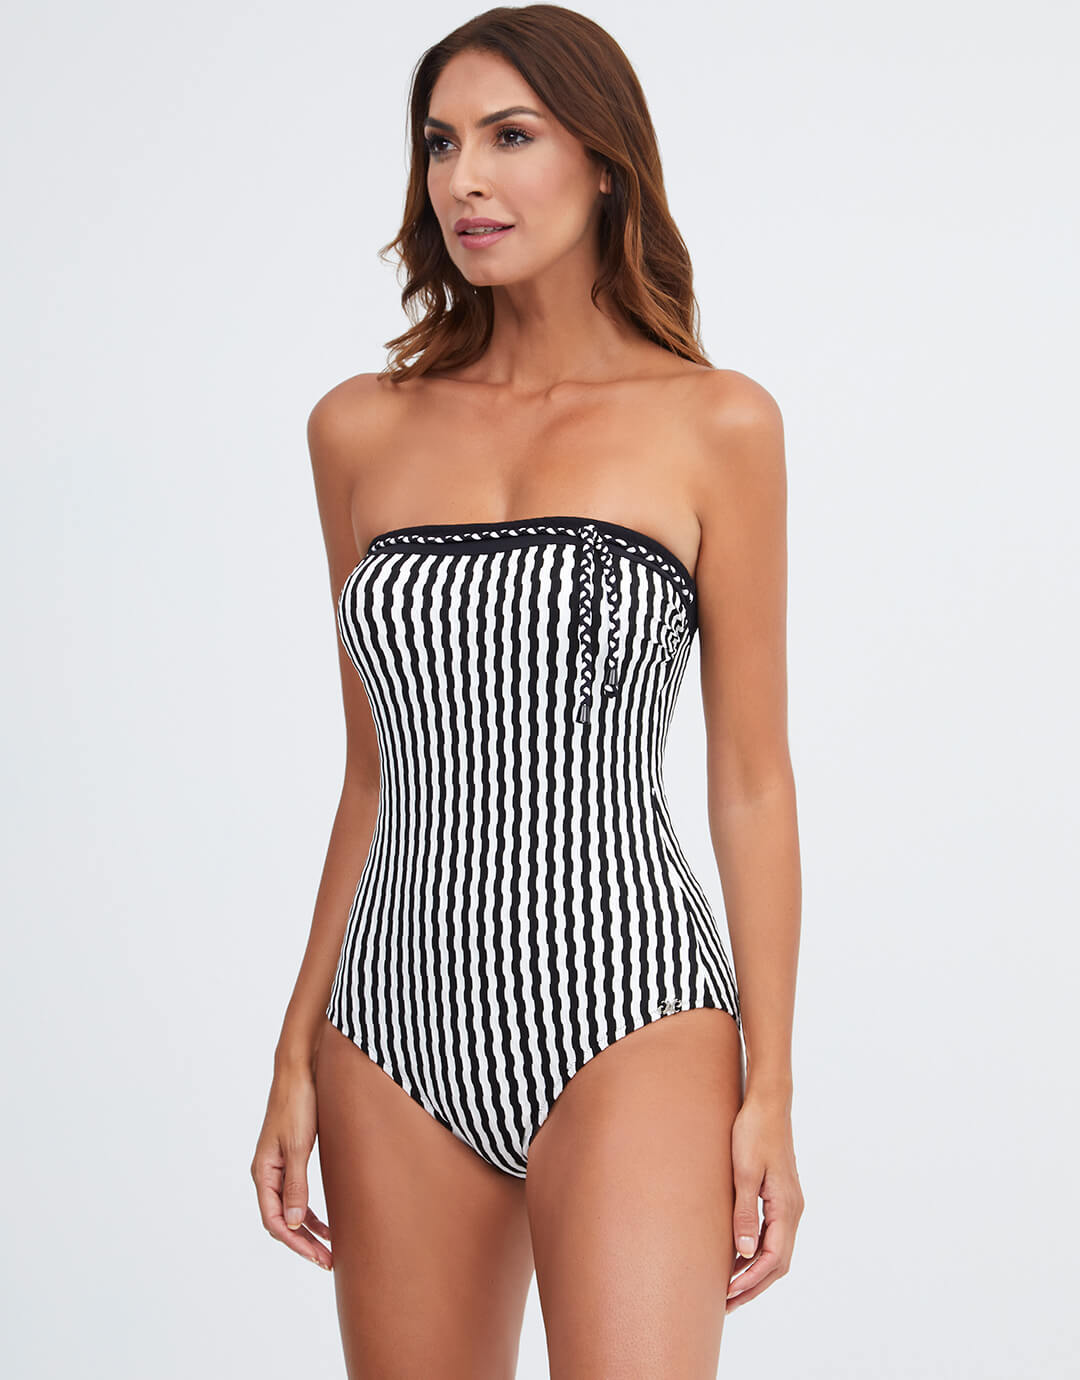 Portofino Bandeau Swimsuit - Black and White - Simply Beach UK